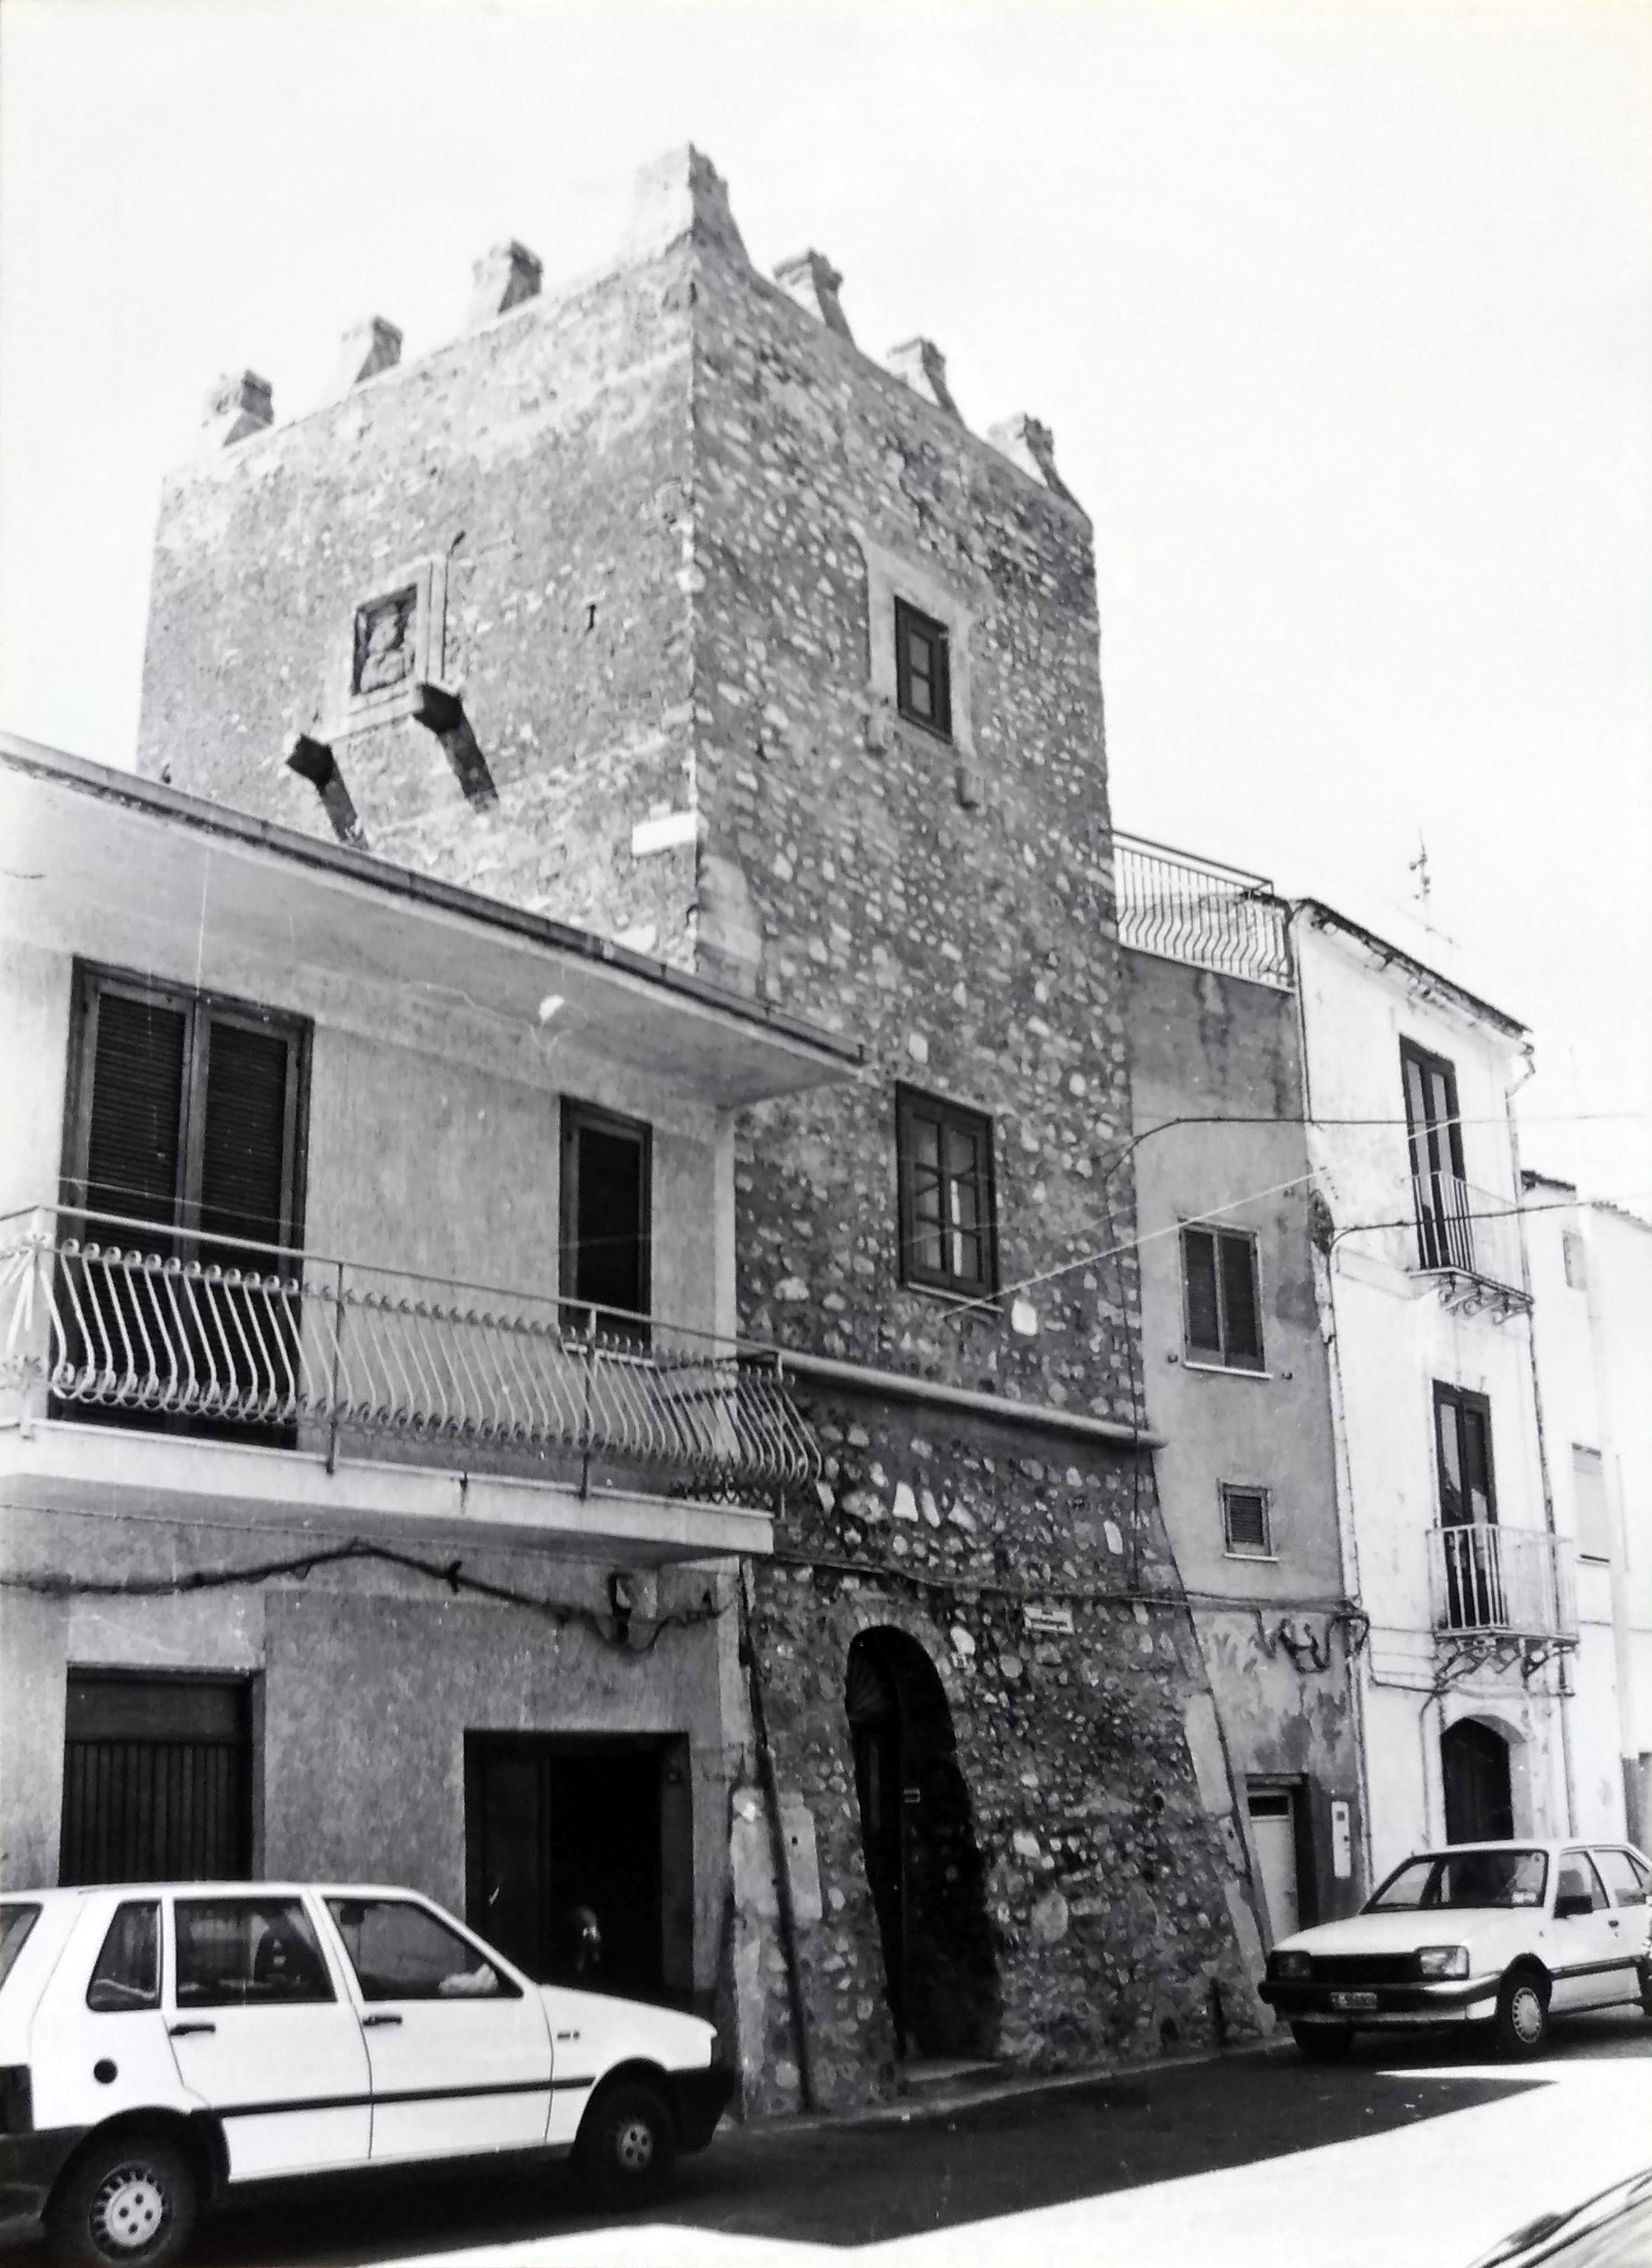 Torre di difesa saracena (torre, difensiva) - Cellole (CE)  (XIII)